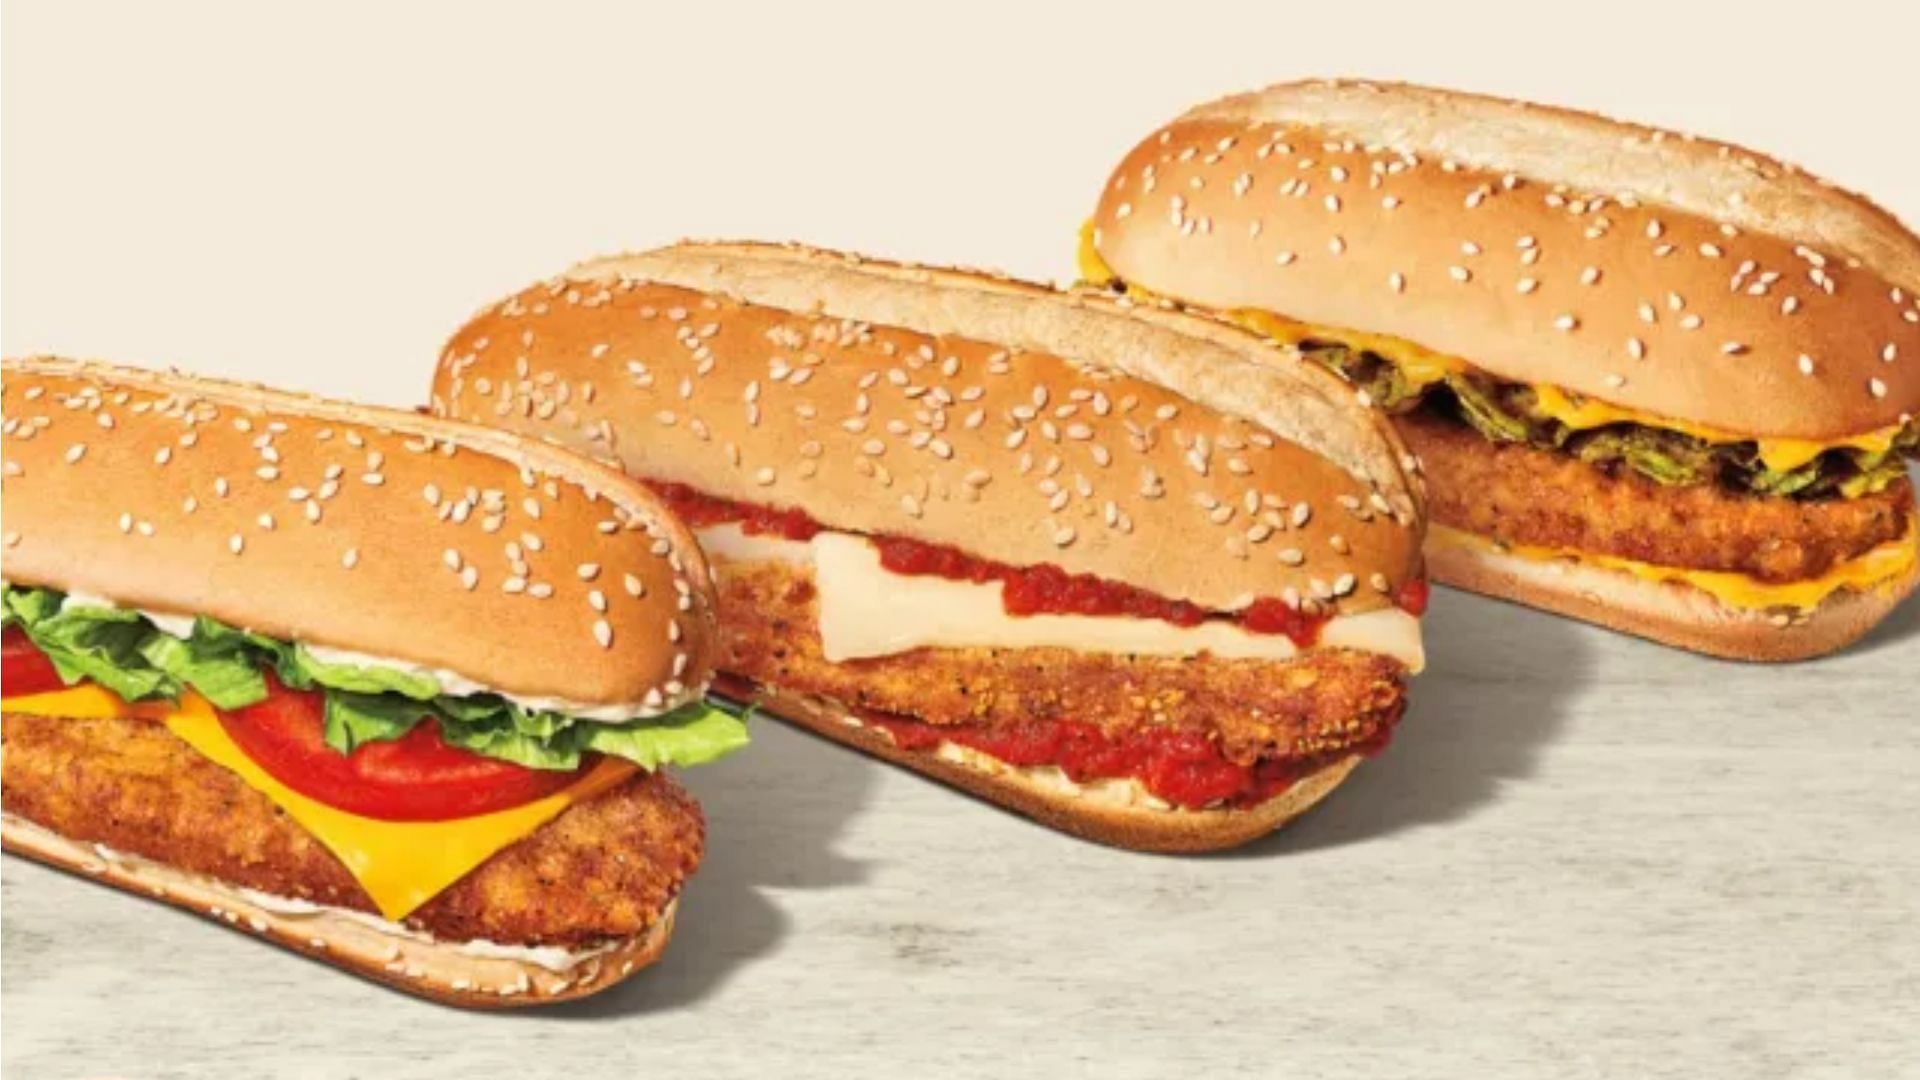 The new line of International Original Chicken Sandwiches (Image via Burger King)